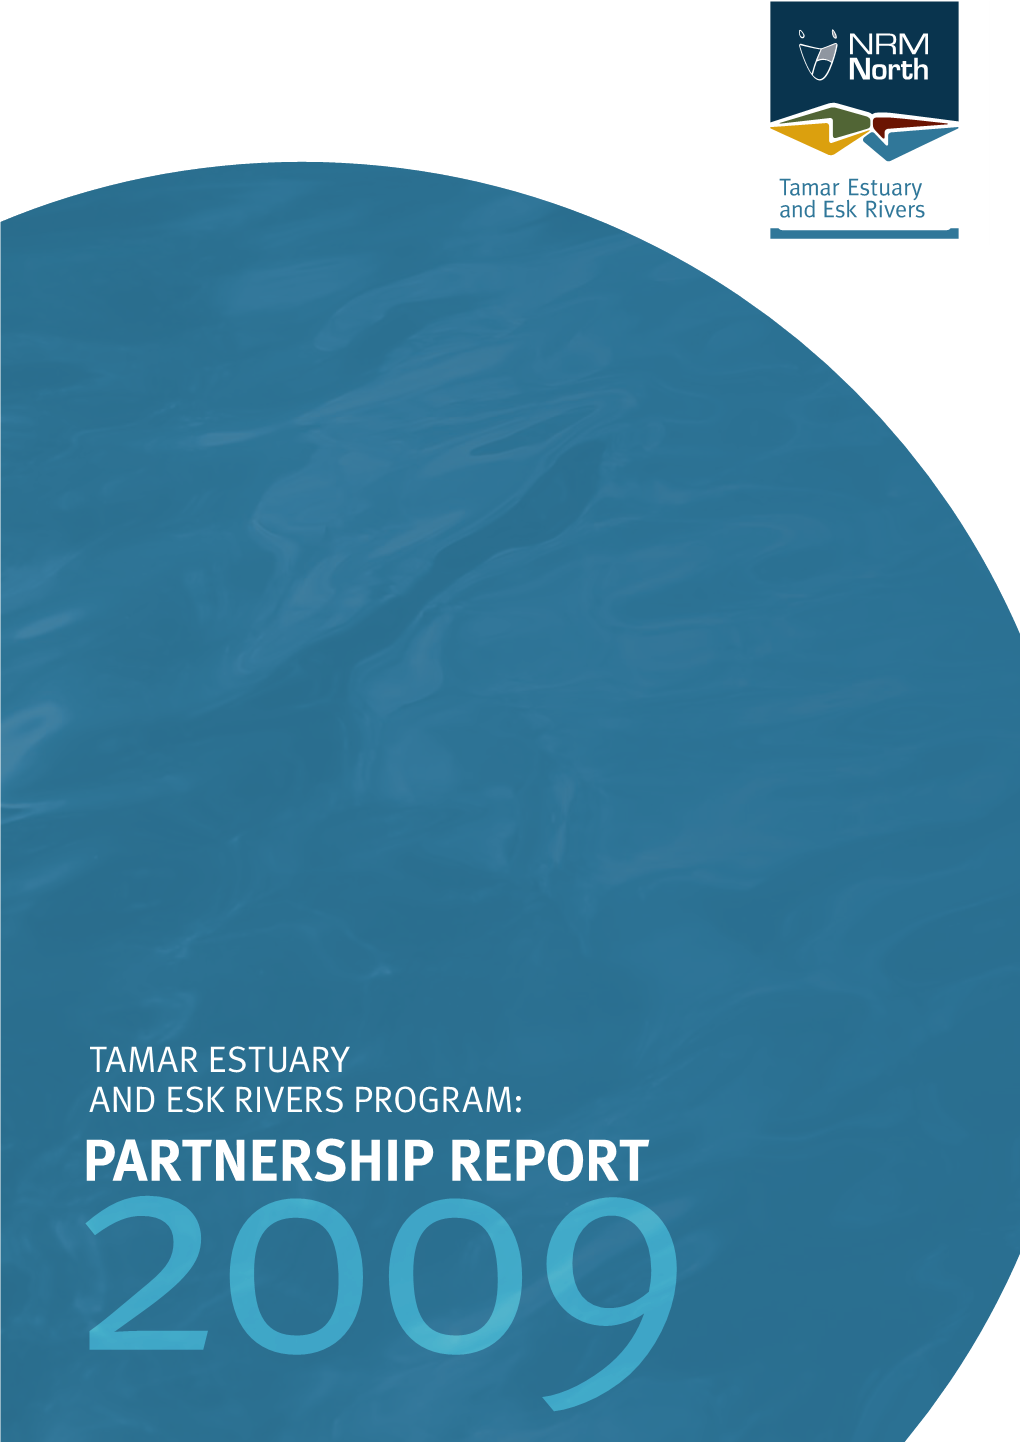 Partnership Report Contents